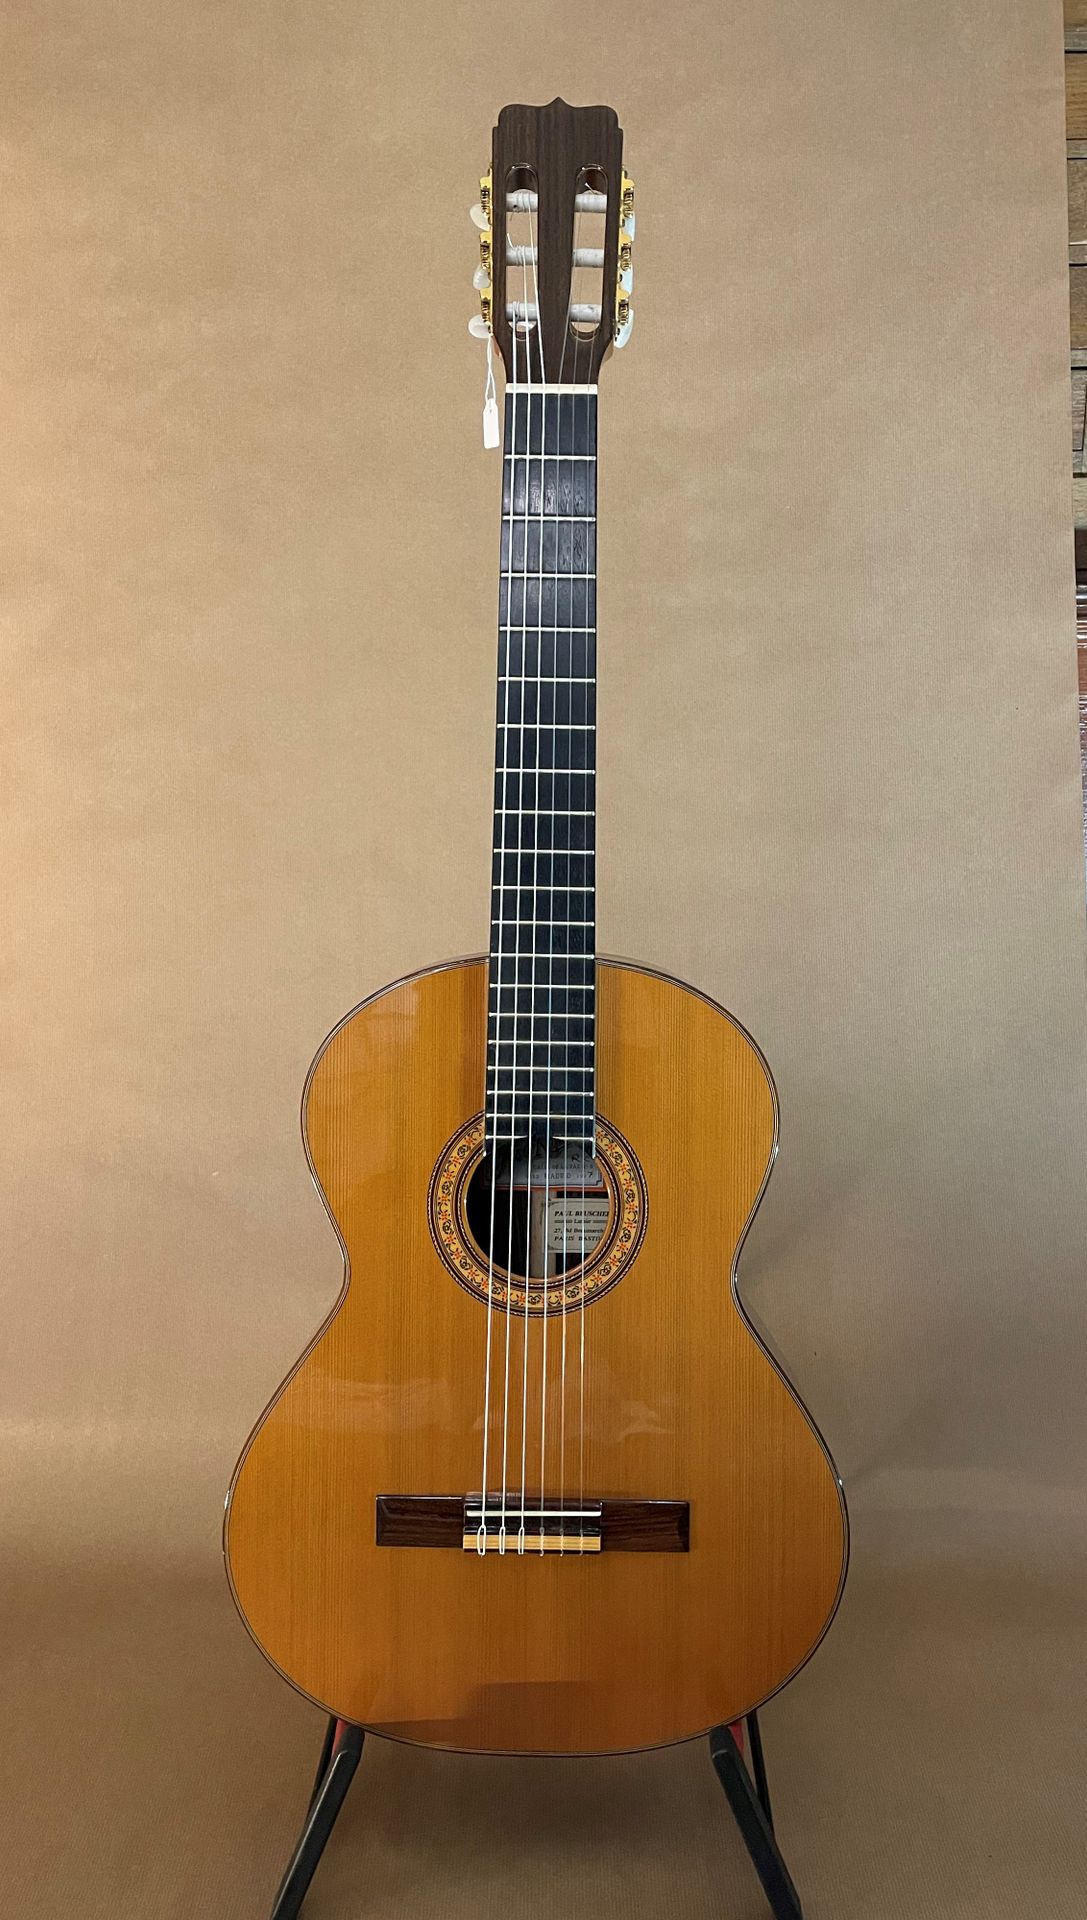 Null 西班牙古典吉他（马德里），由José RAMIREZ制作，型号为R2，带有原始标签。

弦长650毫米，螺母间距52毫米

雪松顶部。杉木背板和侧板
&hellip;